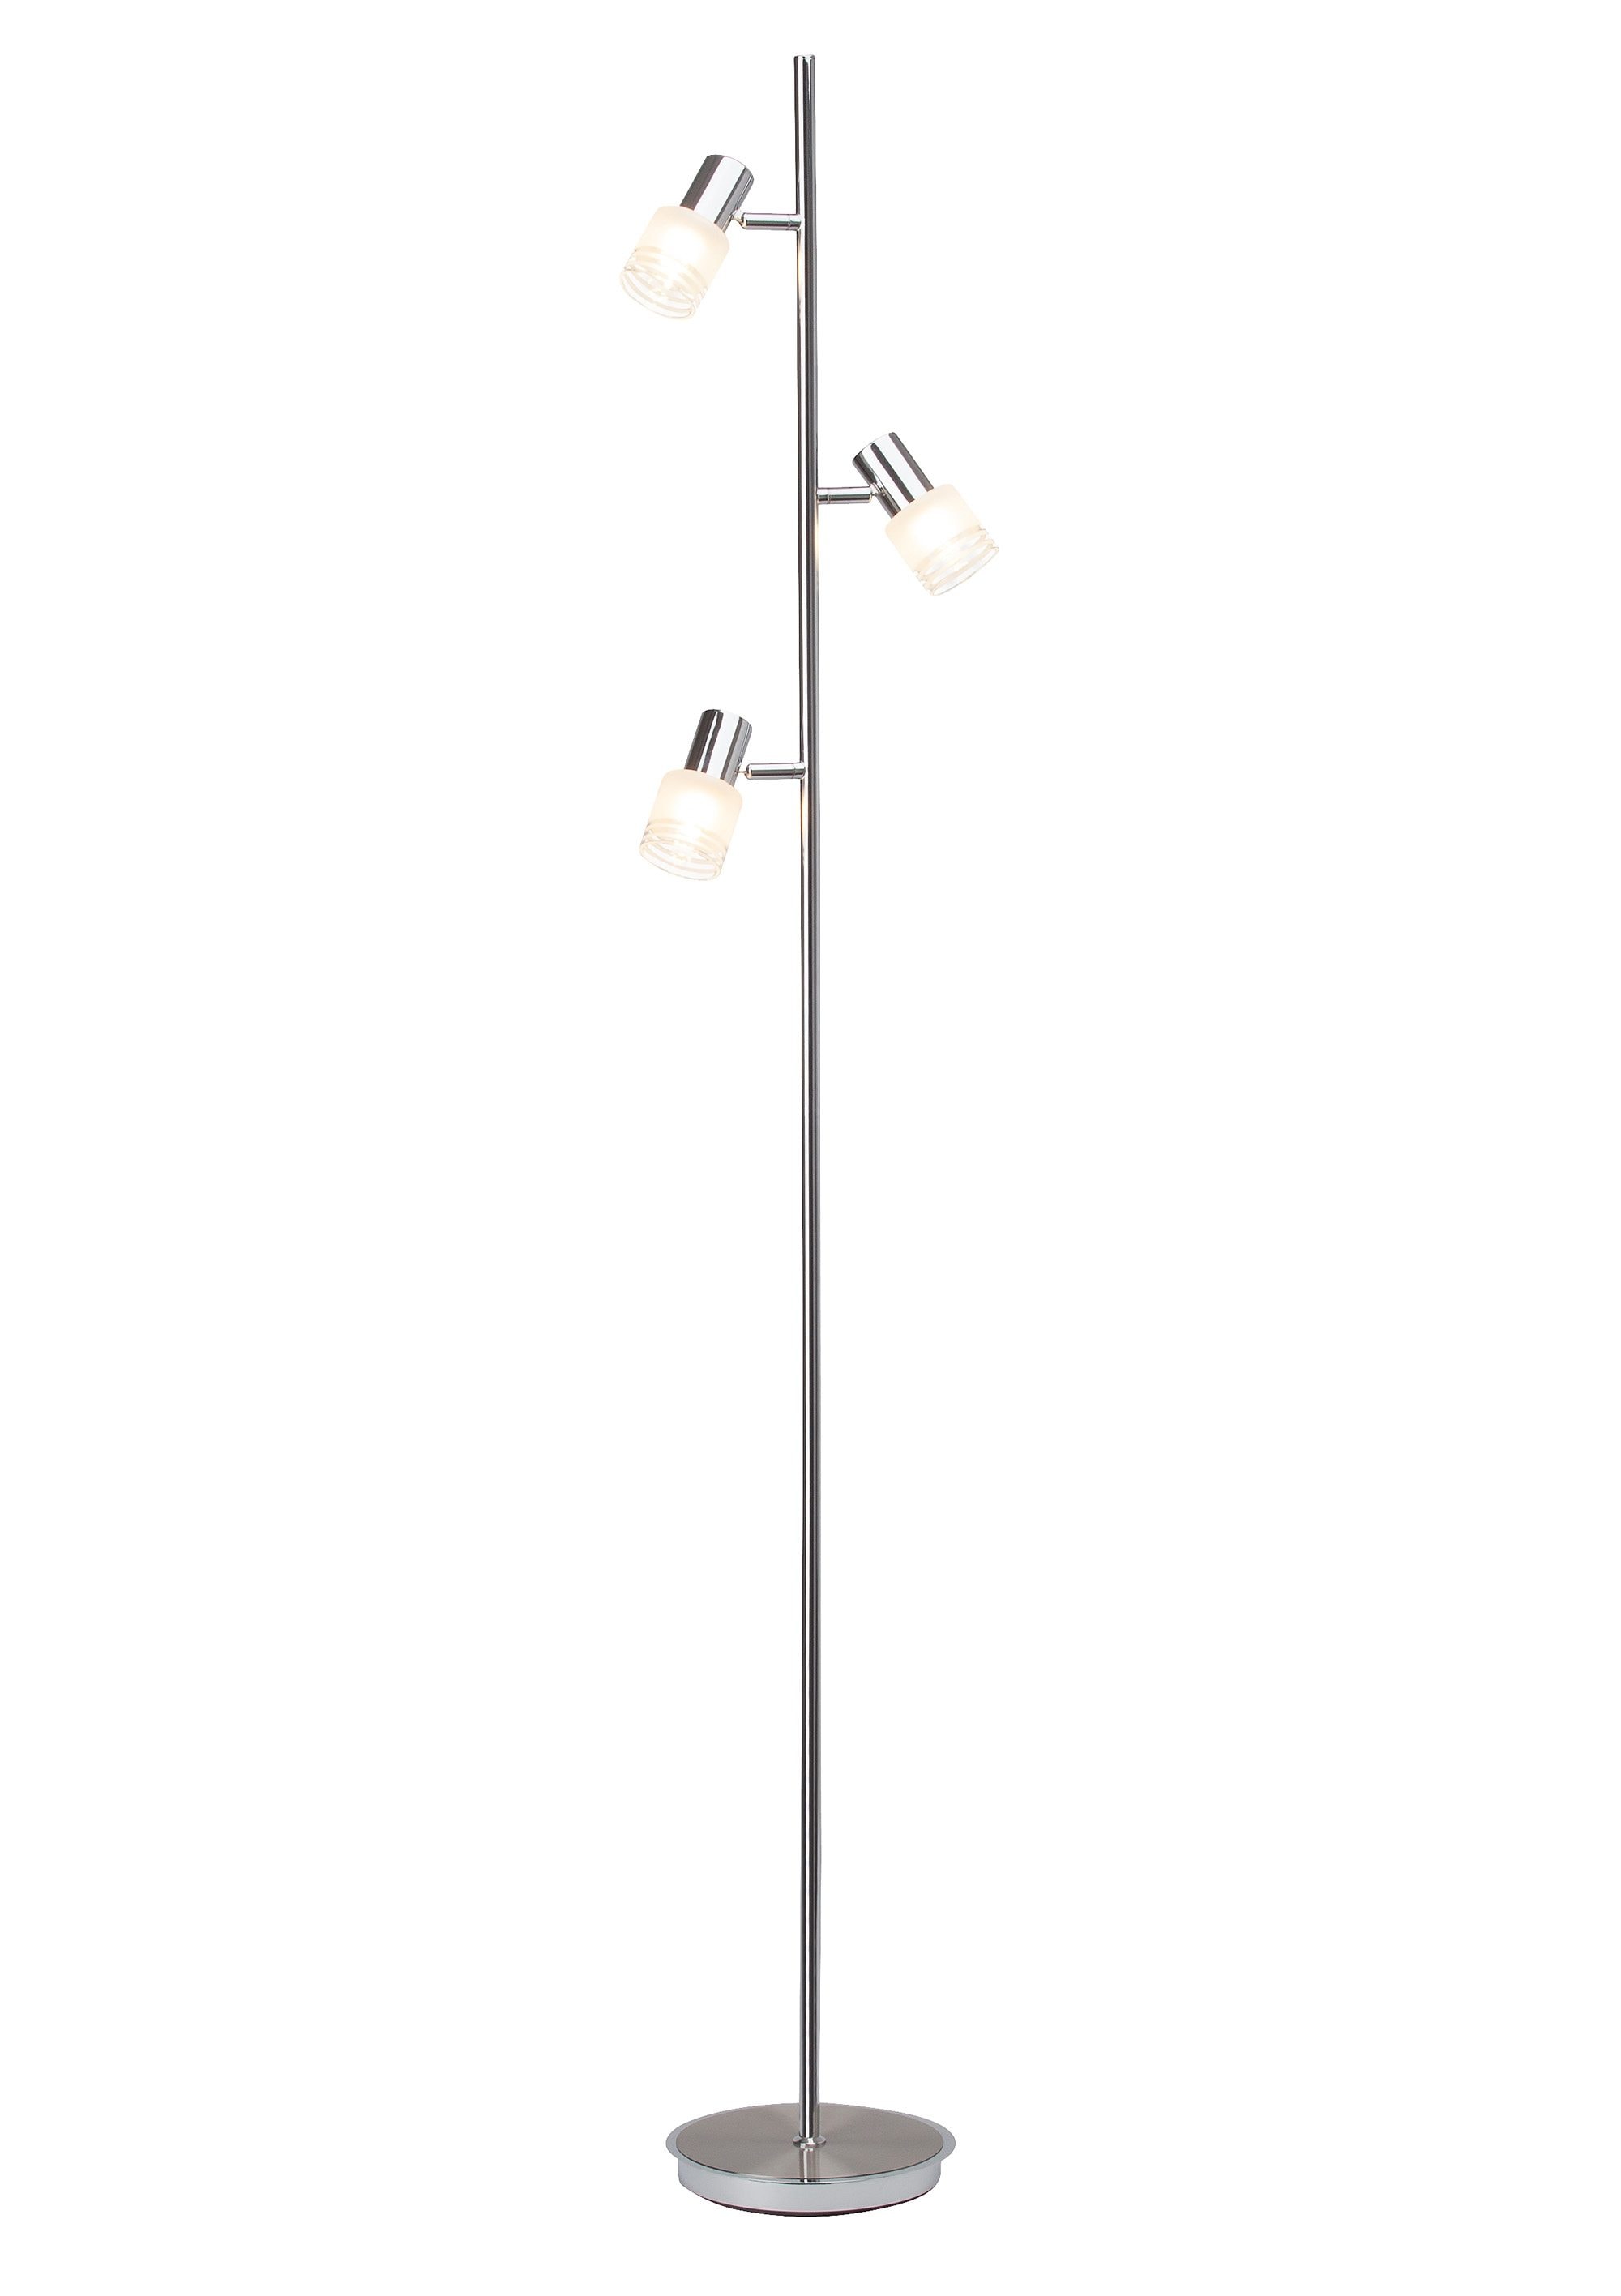 Brilliant LED Stehlampe »LEA«, 3 flammig-flammig, 157cm Höhe, 3 x E14 max.  4W, eisen/chrom, schwenkbar, Metall/Glas kaufen online bei OTTO